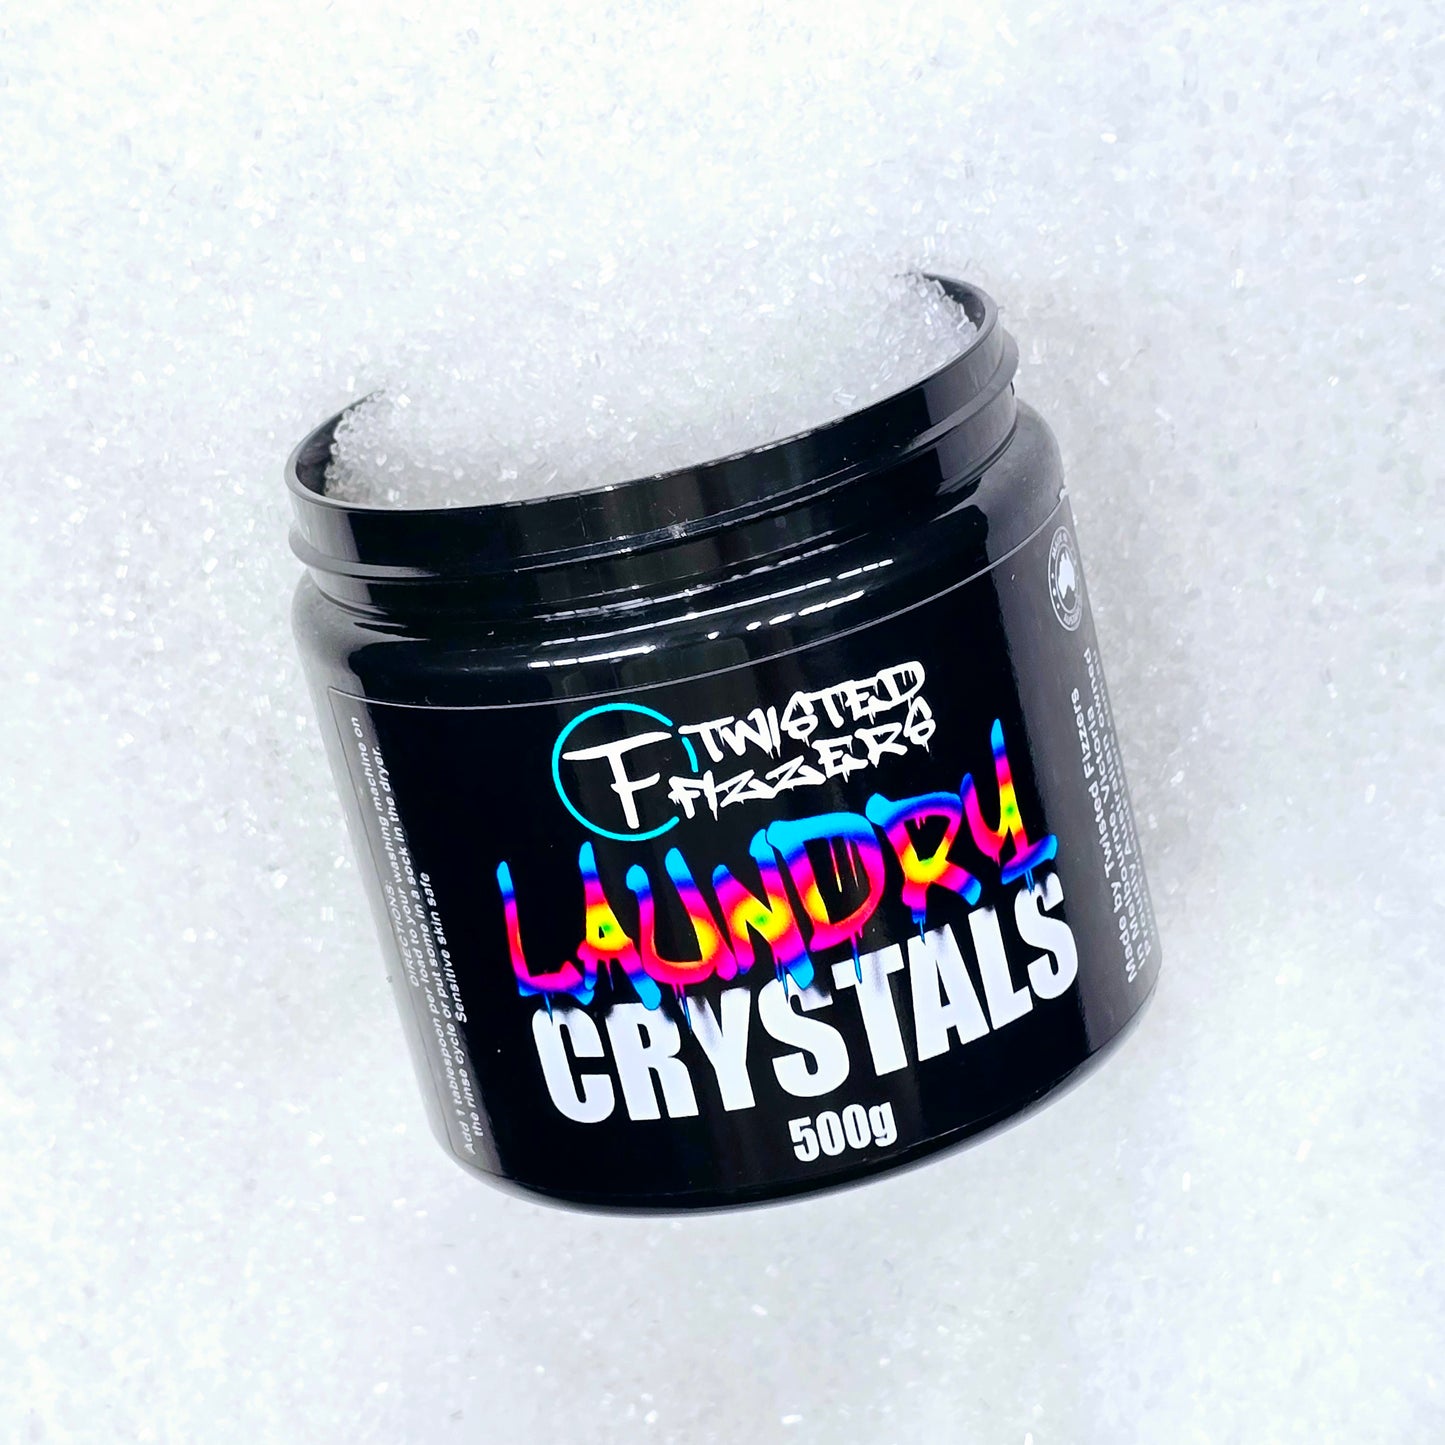 Laundry Crystals - 500g Jar